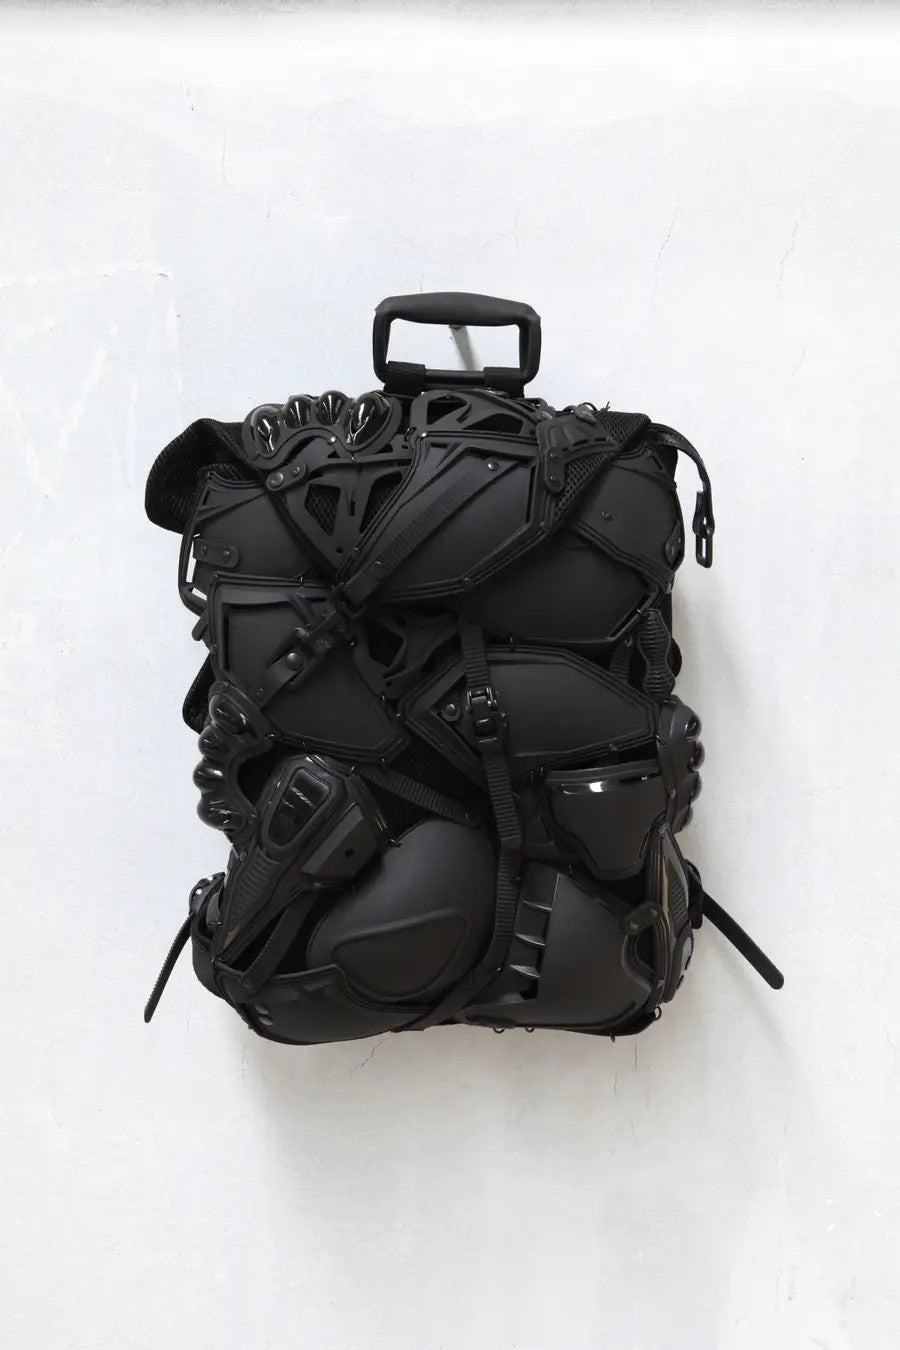 INNERRAUM backpack